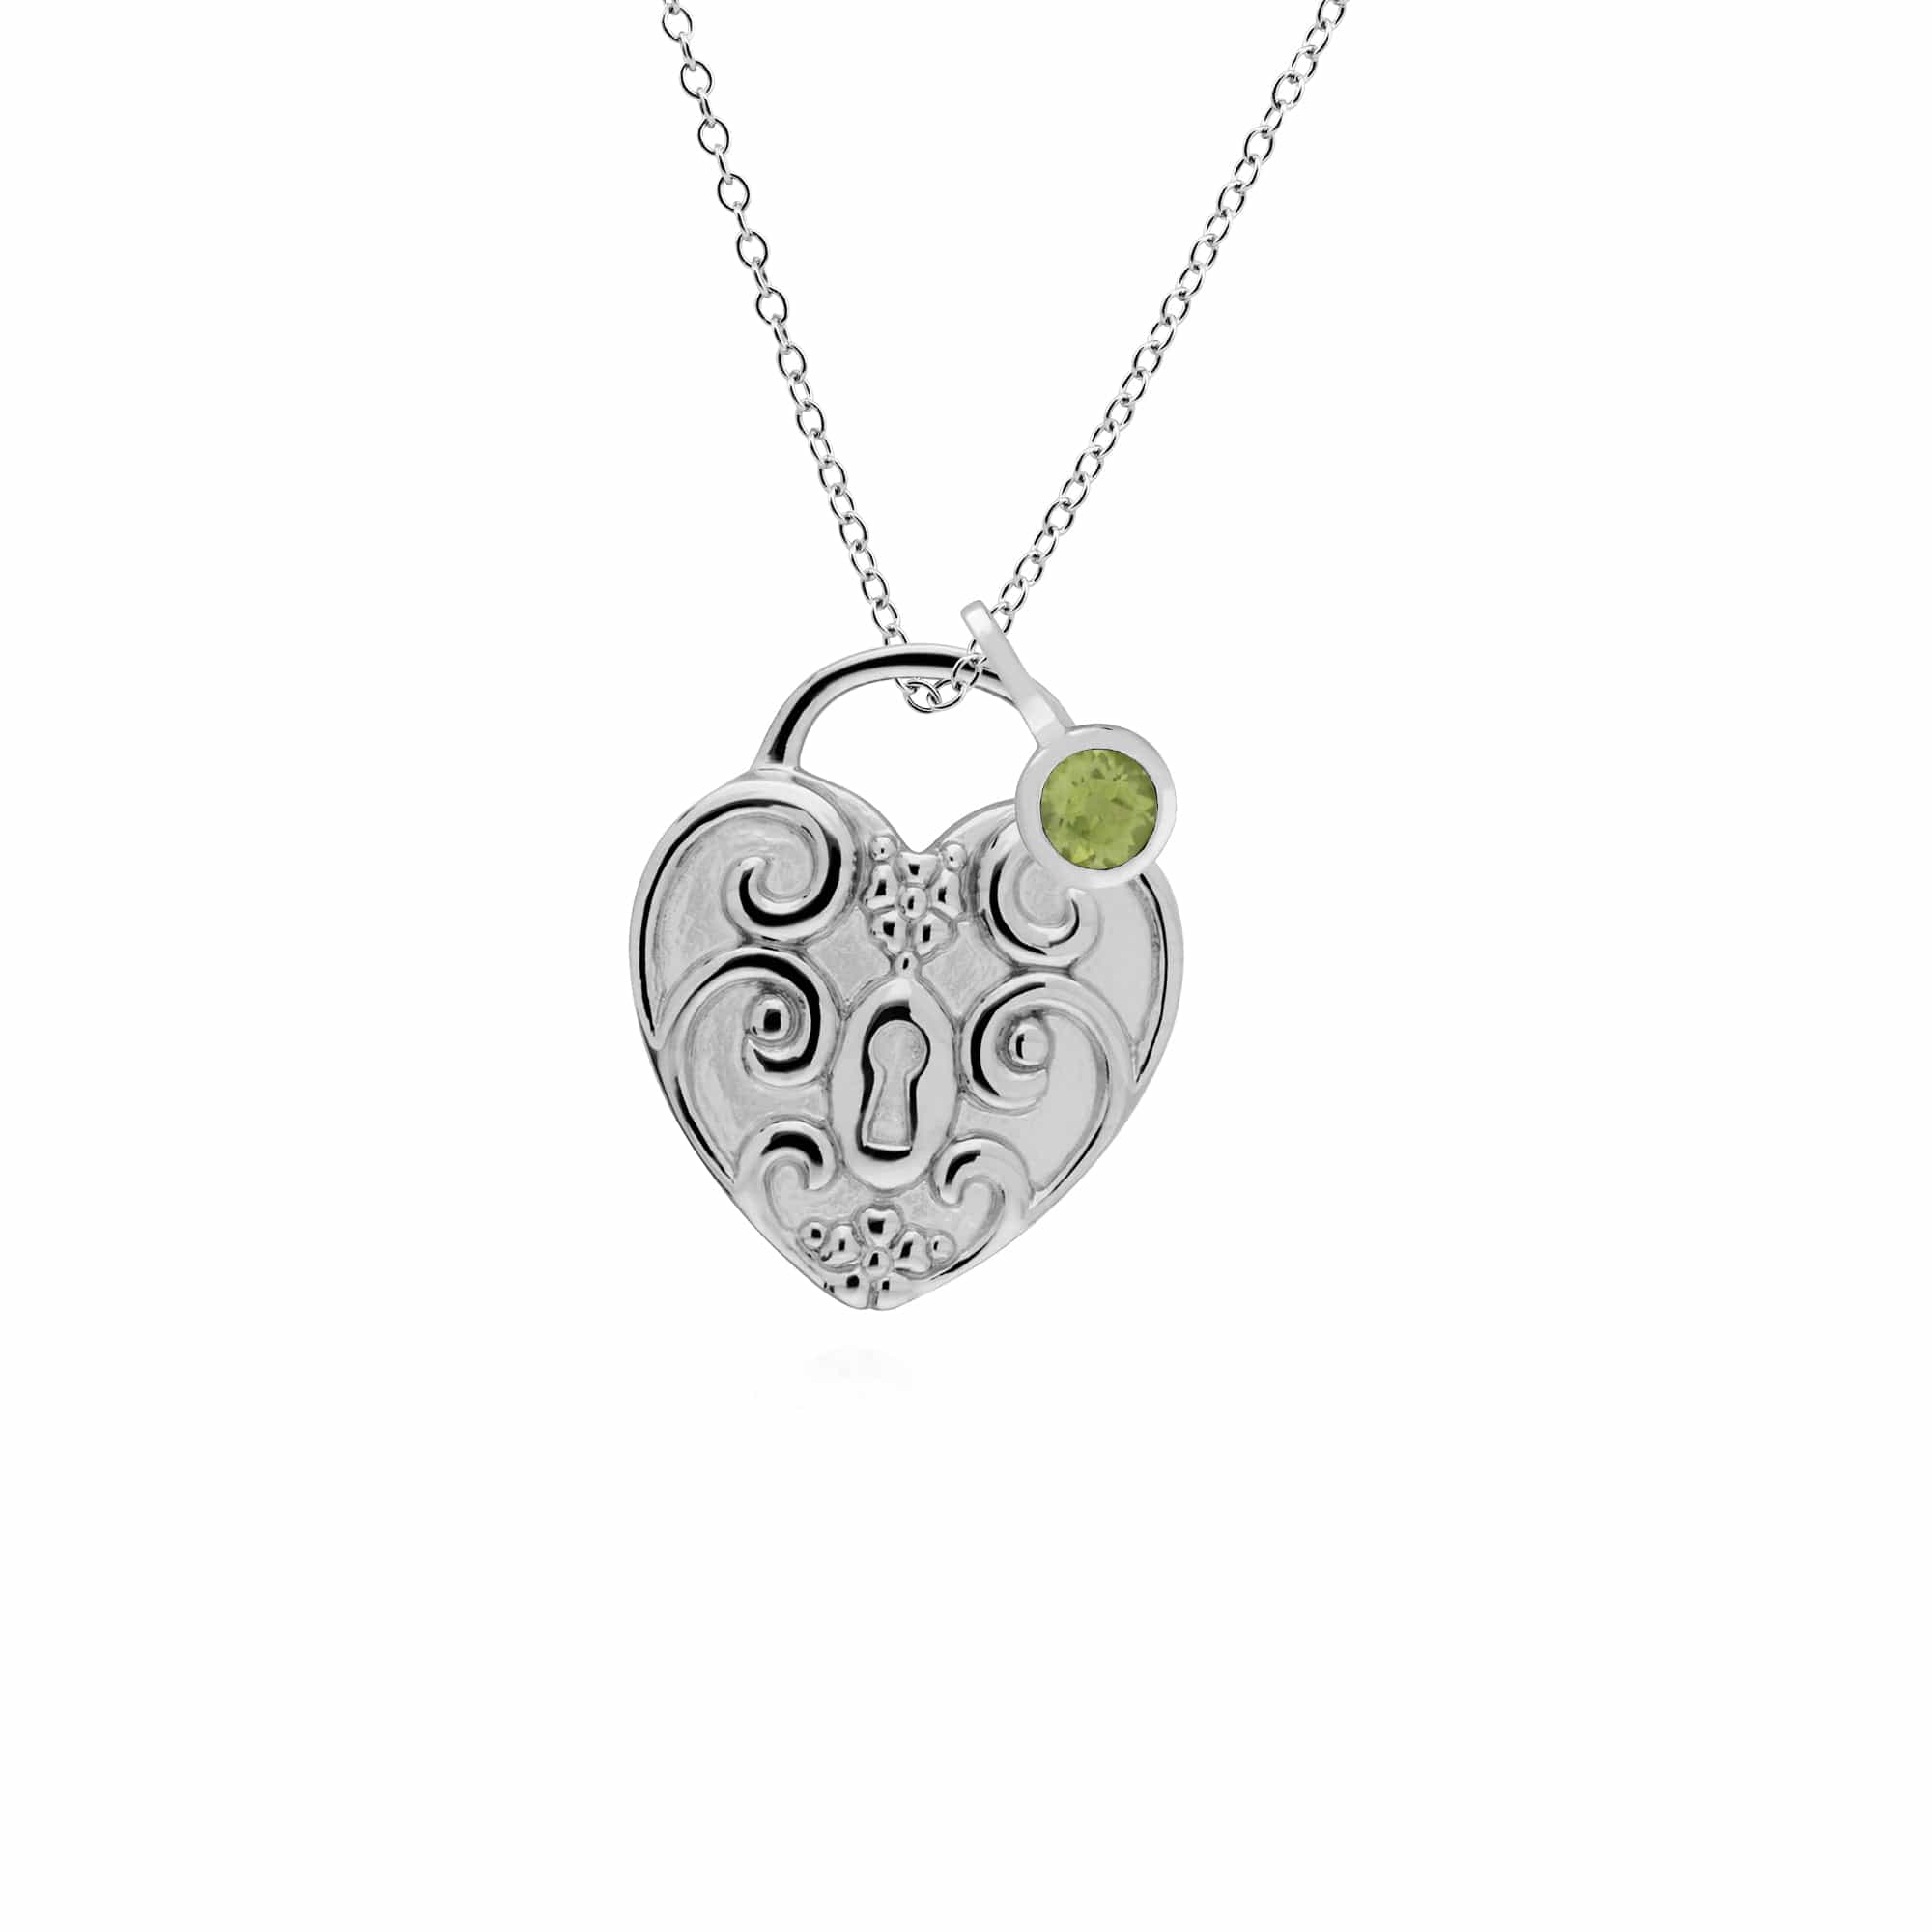 270P027605925-270P026601925 Classic Swirl Heart Lock Pendant & Peridot Charm in 925 Sterling Silver 1